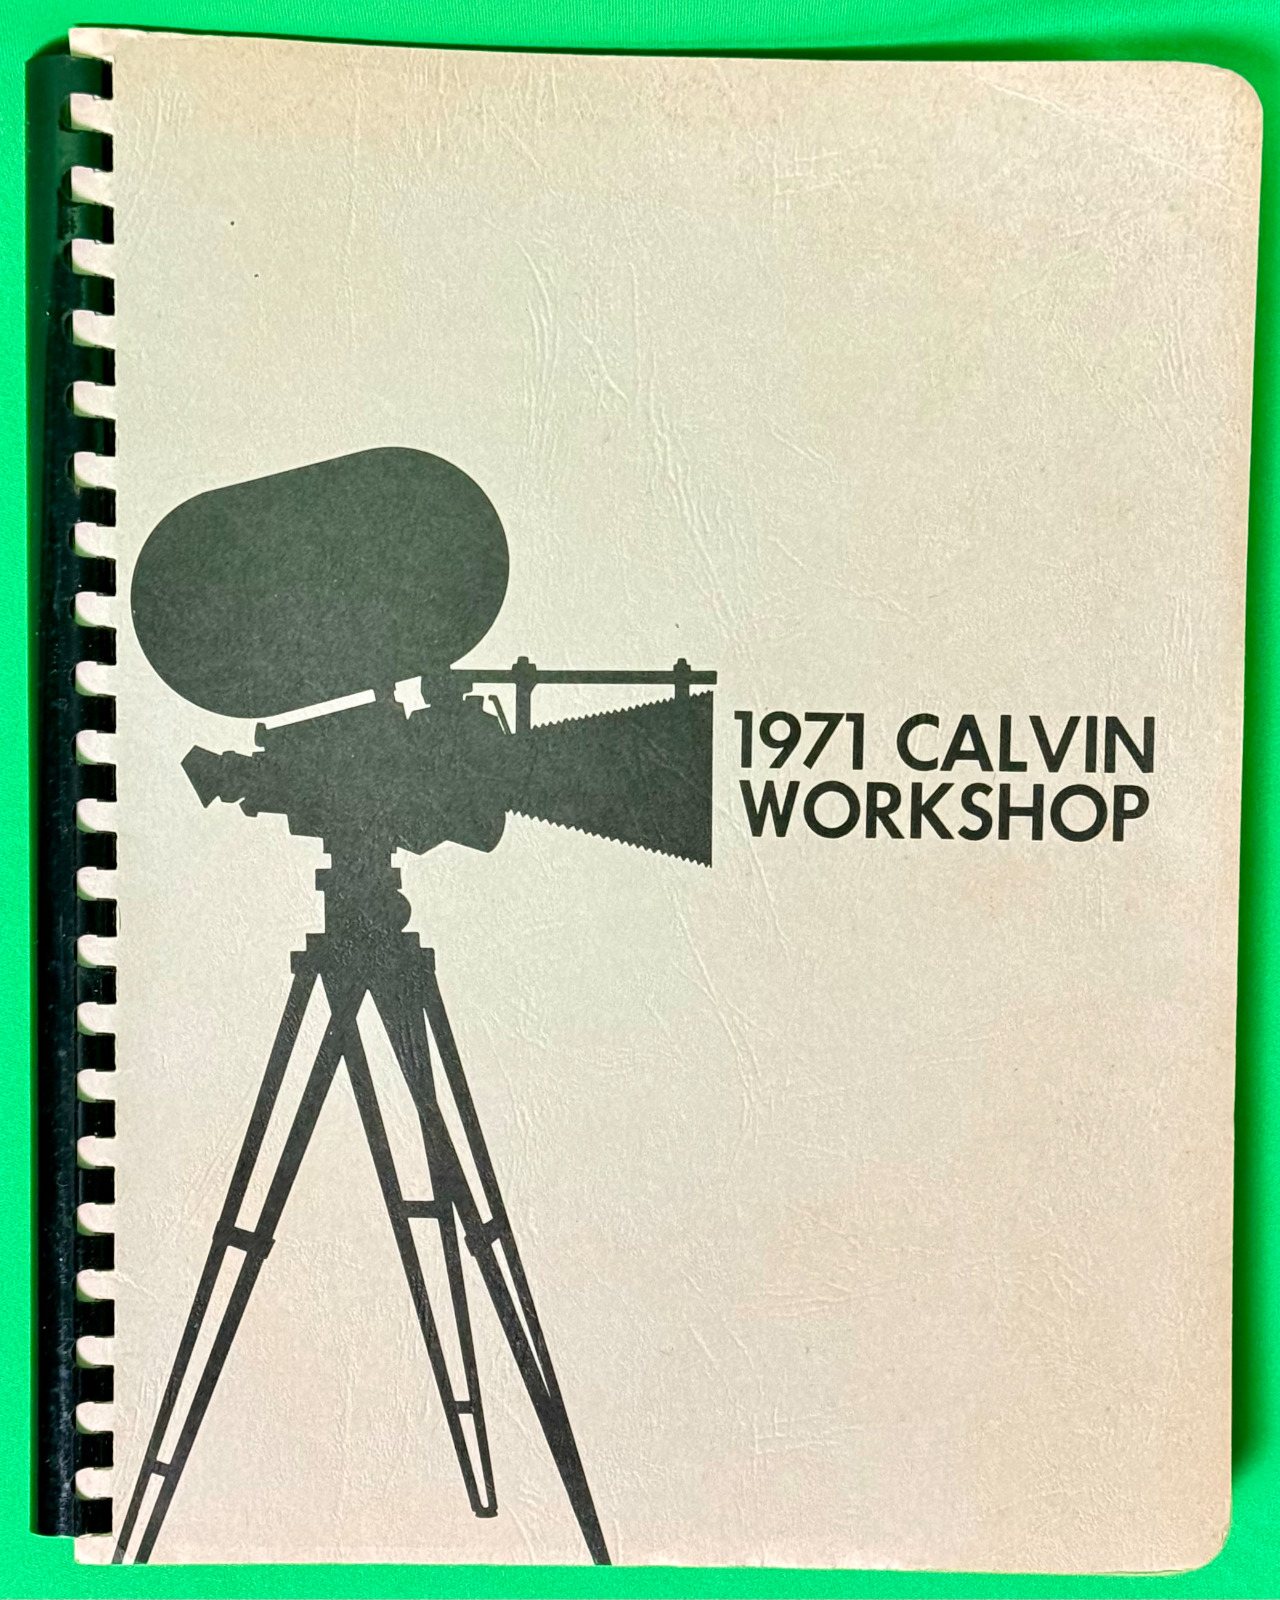 1971 CALVIN WORKSHOP Annual 16mm Industrial Film Production Seminar Manual RARE